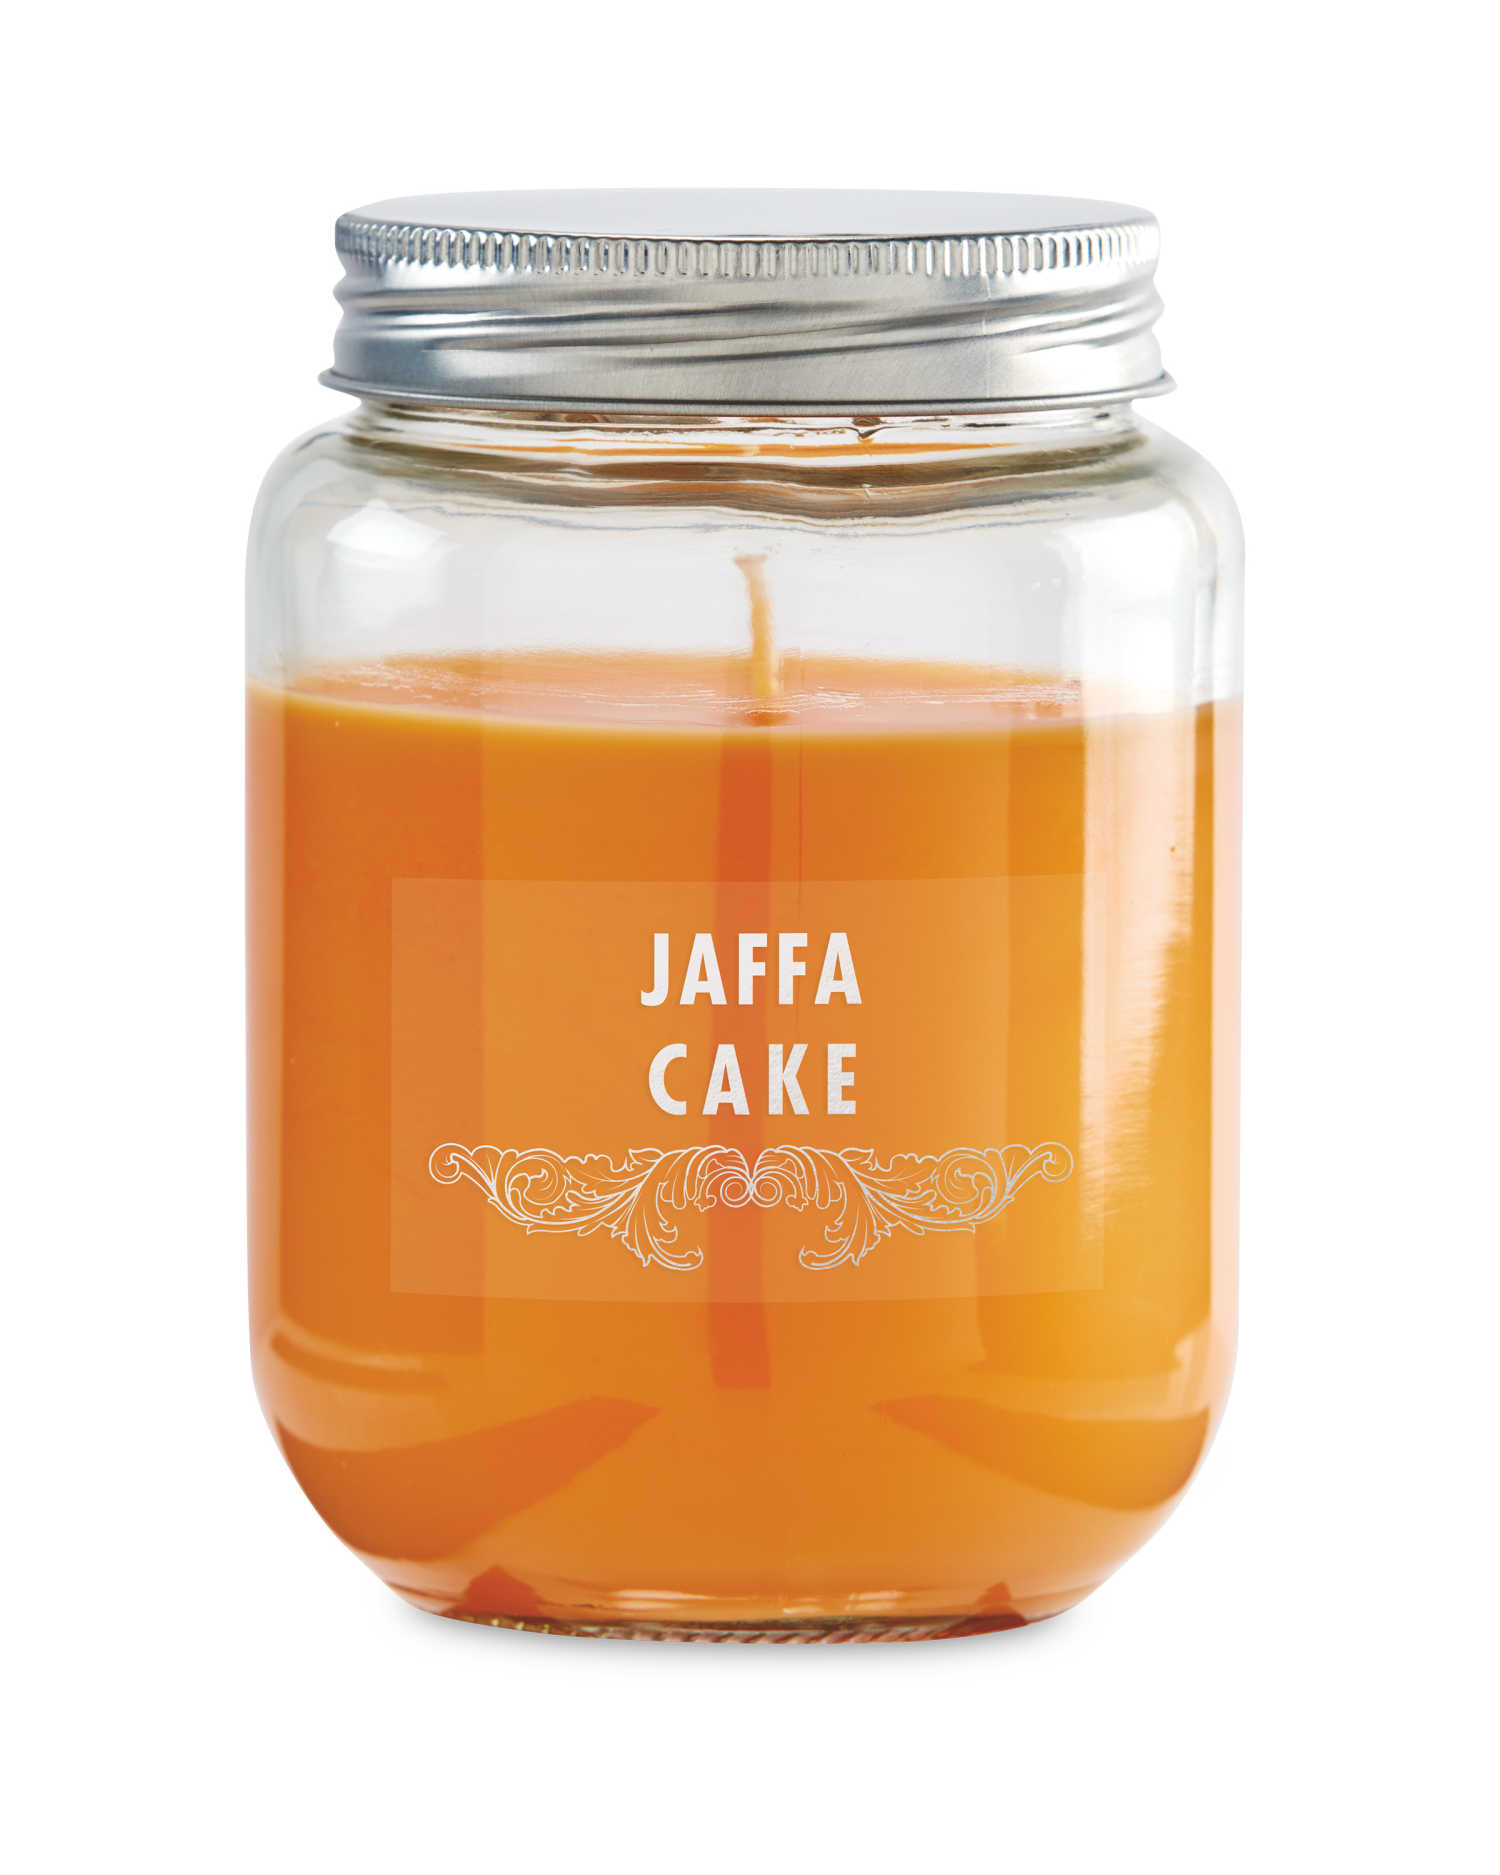 Aldi Jaffa Cake Candle